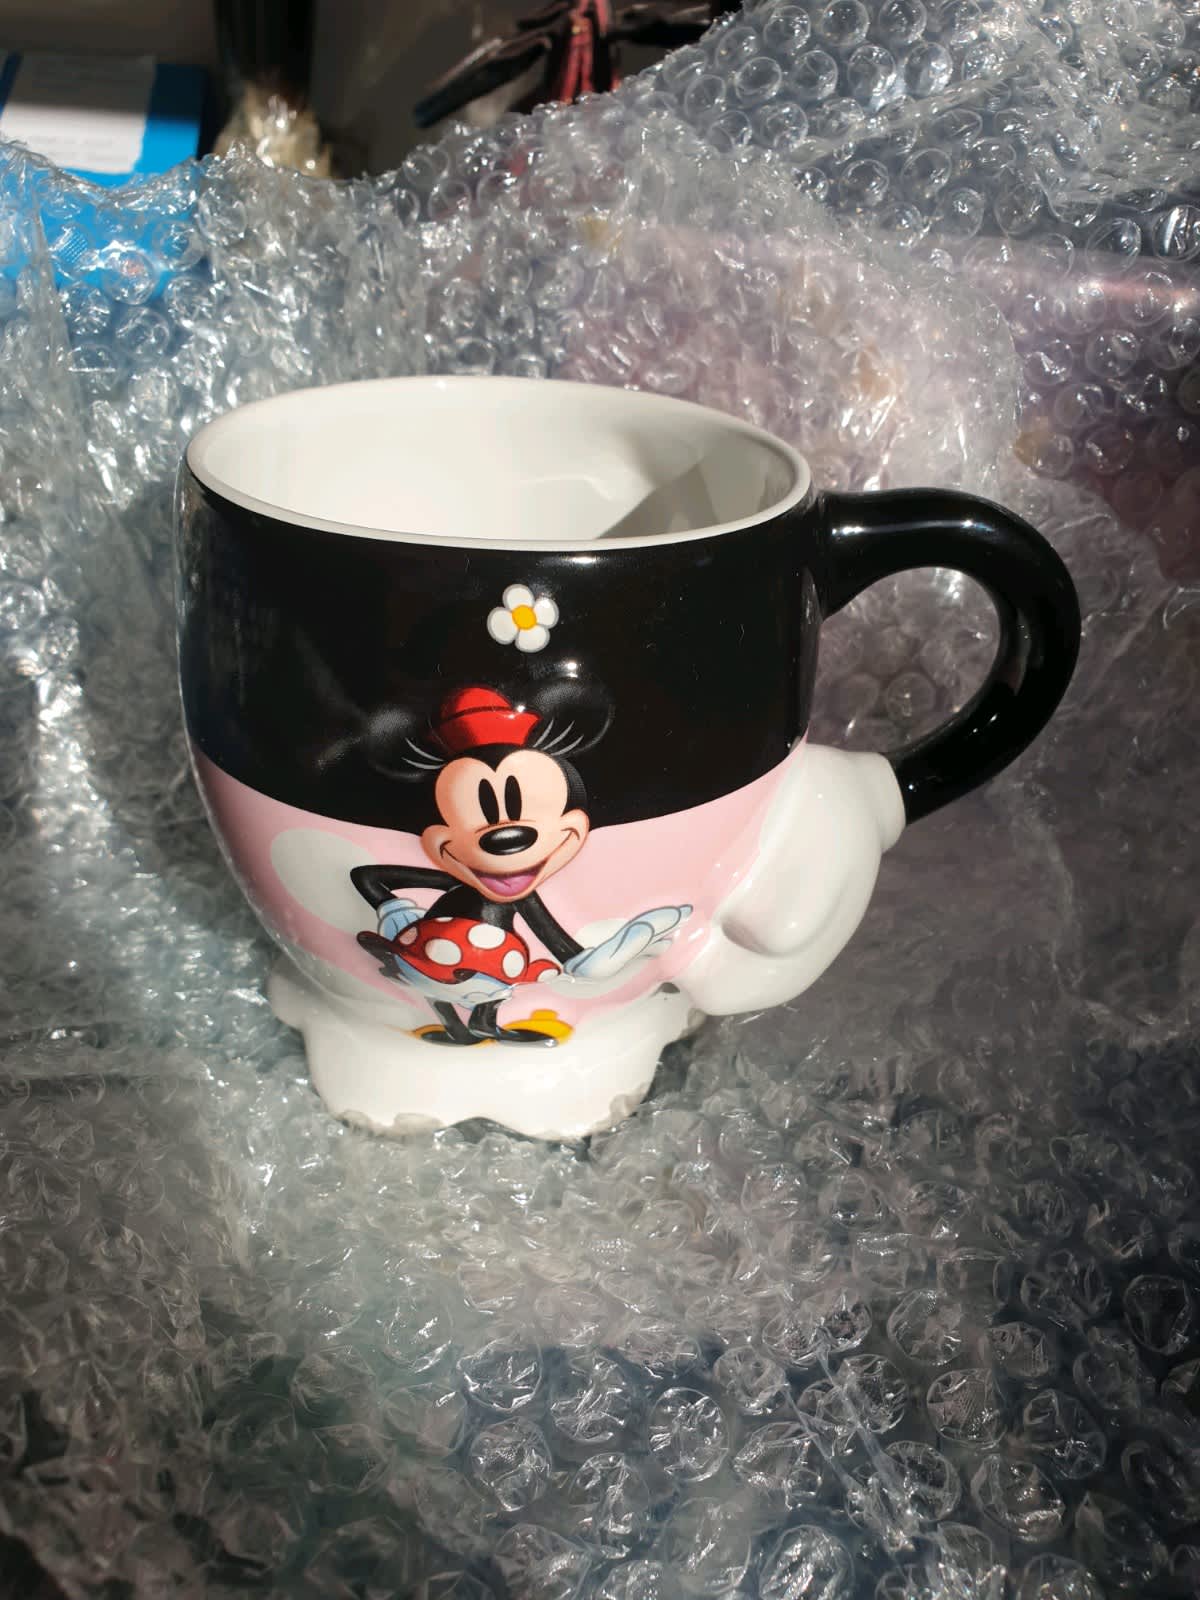 Disney Mickey & Minnie Mouse Peekaboo 2-pack 16 Oz Ceramic Mug Set : Target